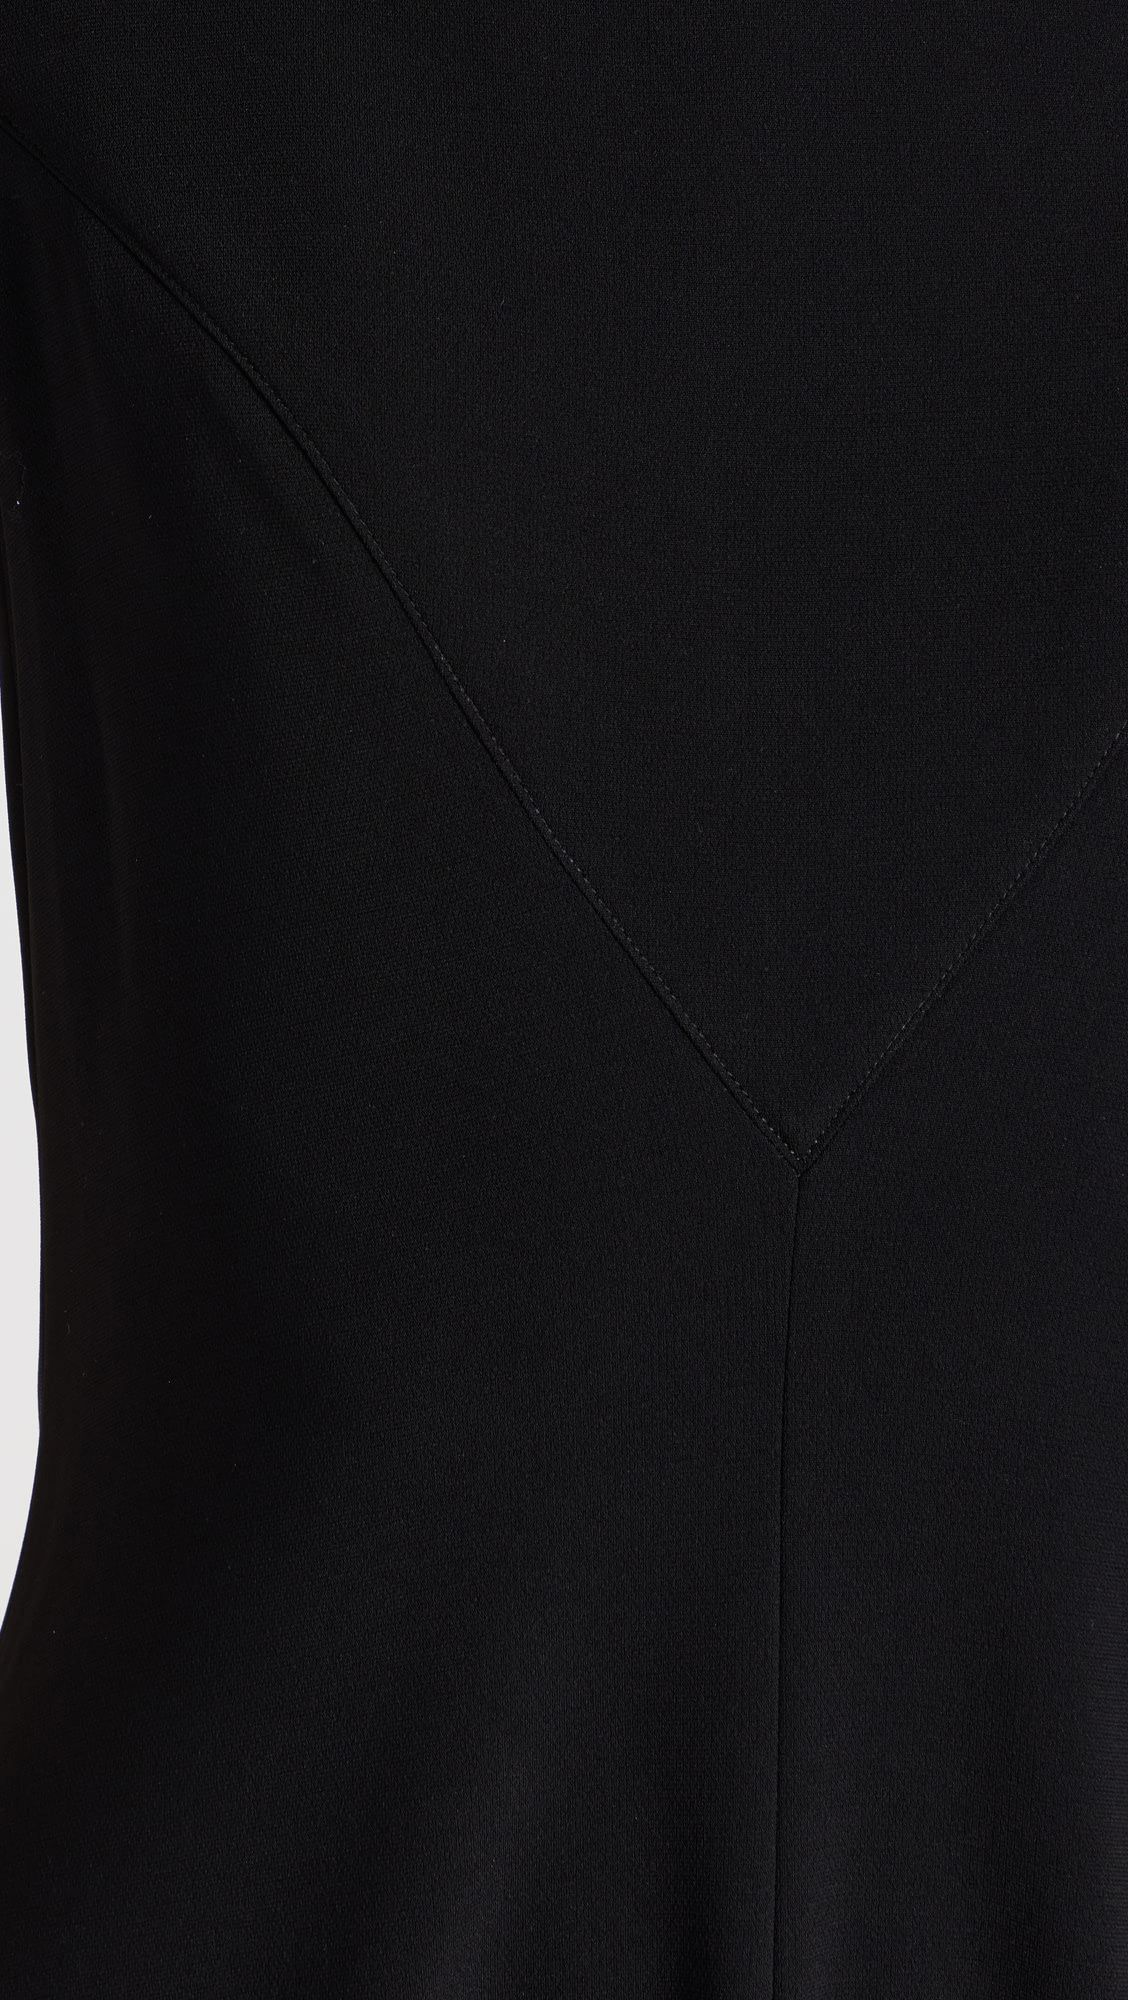 OEM Sleeveless cutout black slimming waist dress